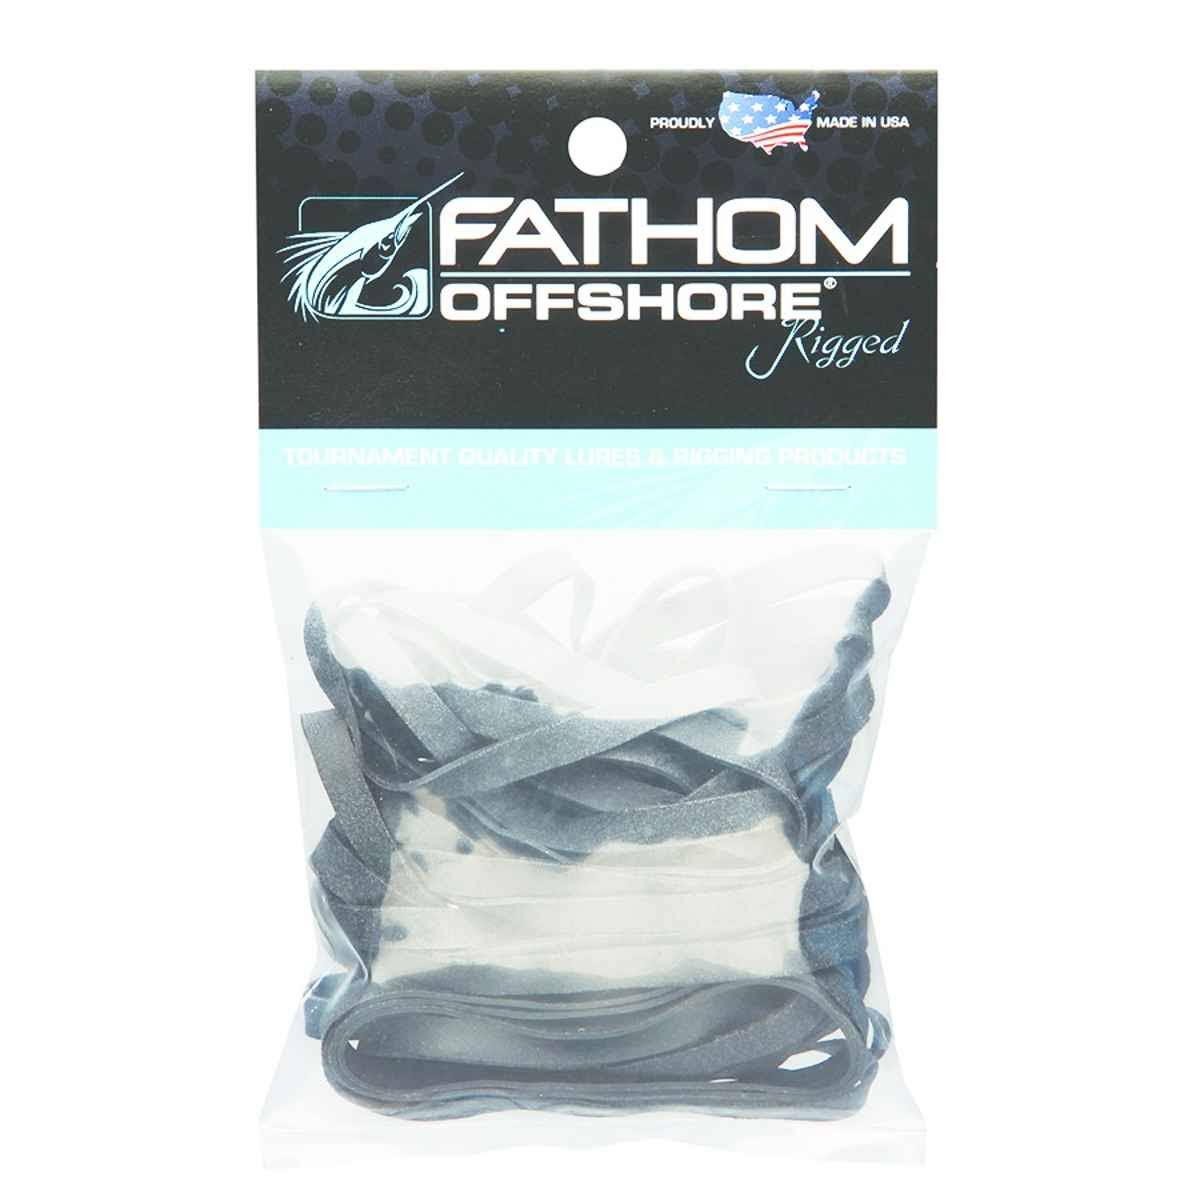 Fathom RB-64 Rubber Bands